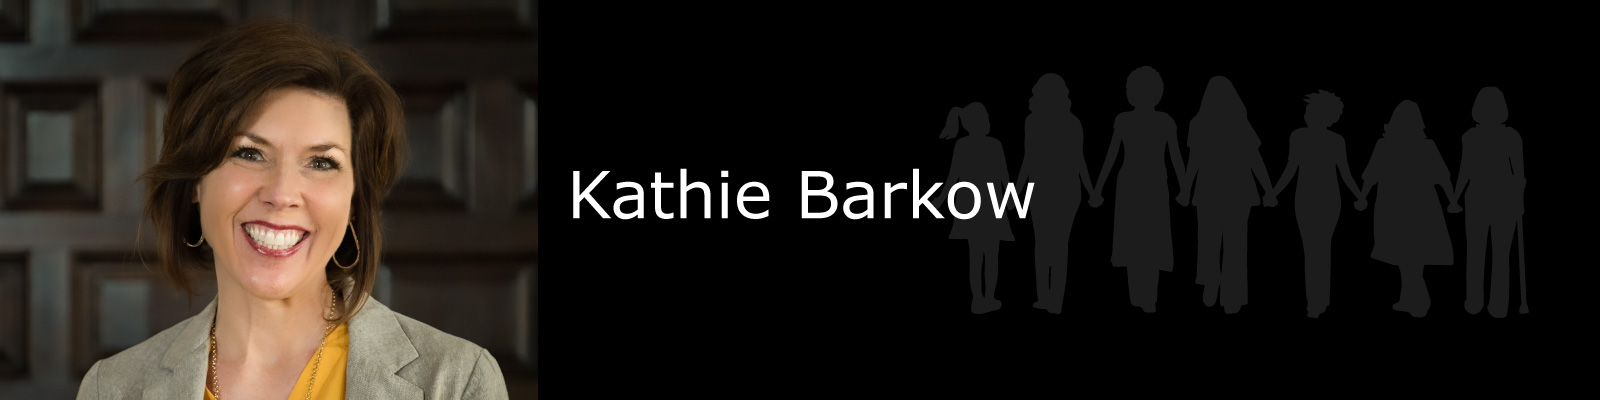 Photo of Kathie Barkow.